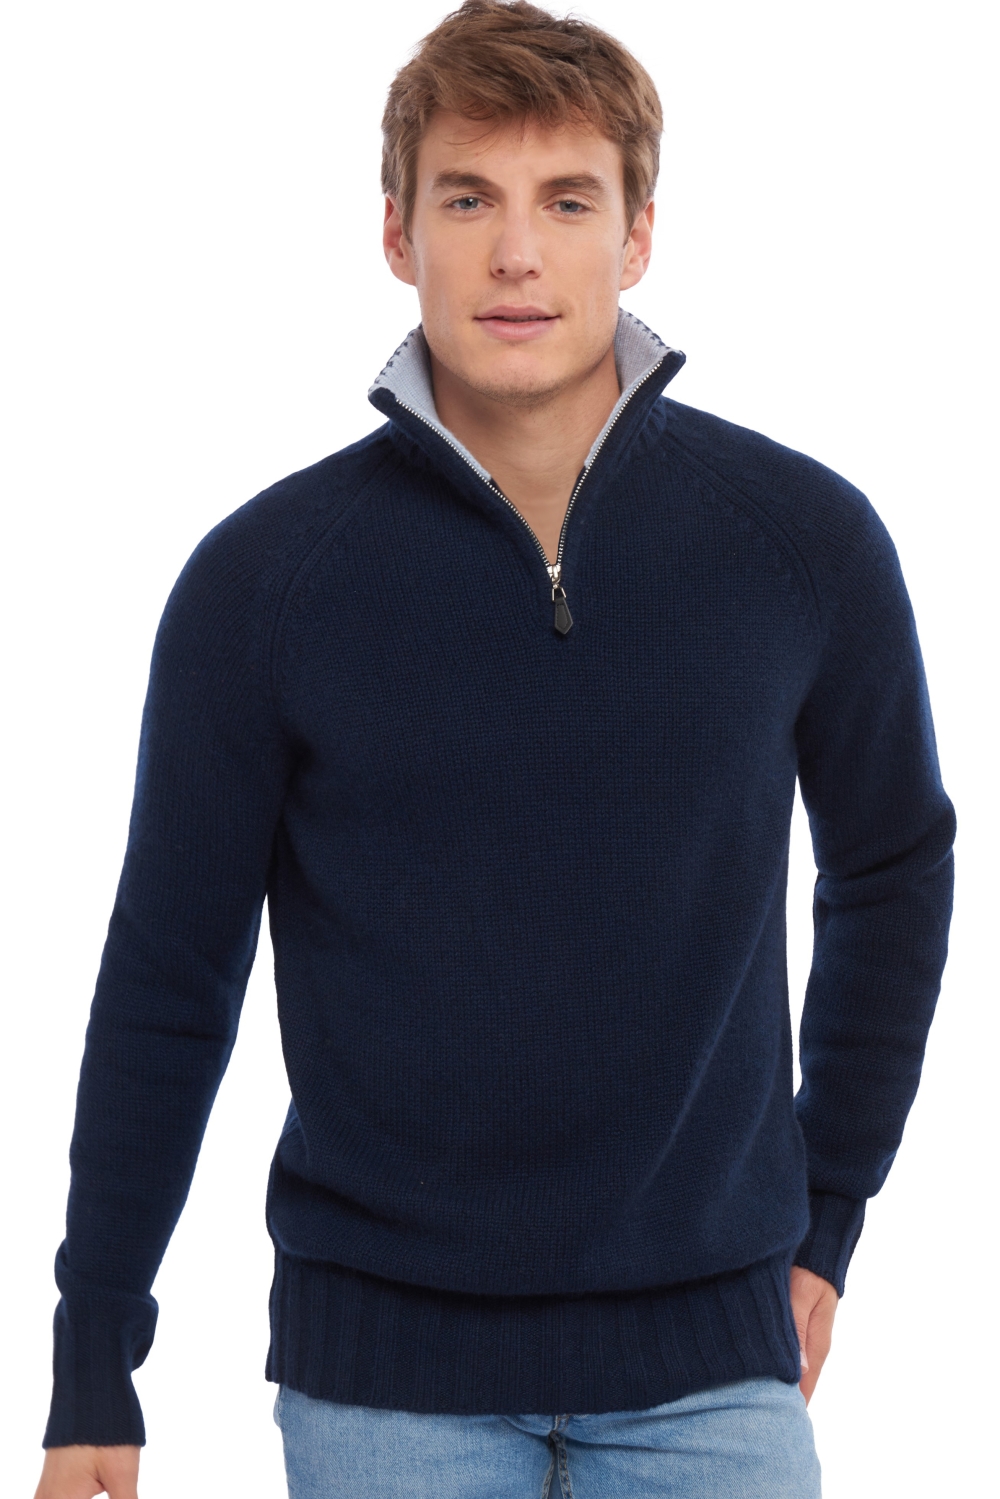 Cashmere men chunky sweater olivier dress blue bayou xl